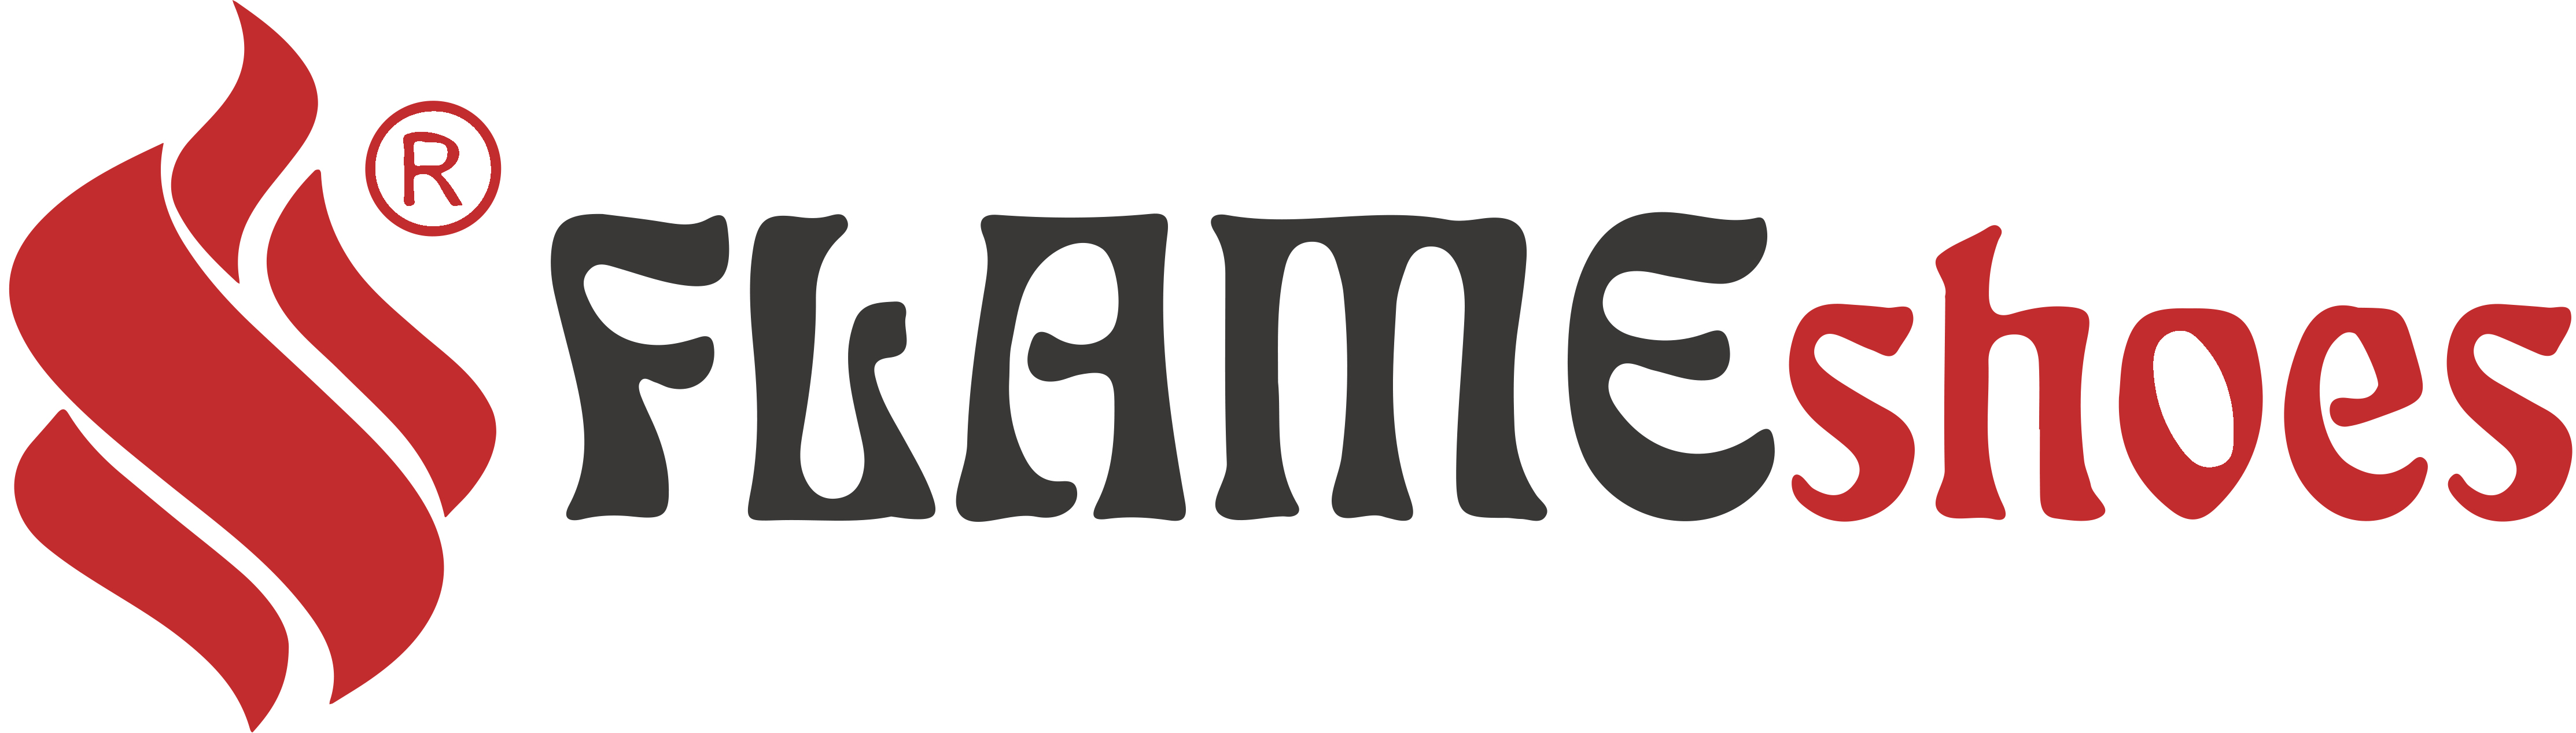 cca_logo-flameshoes.jpg